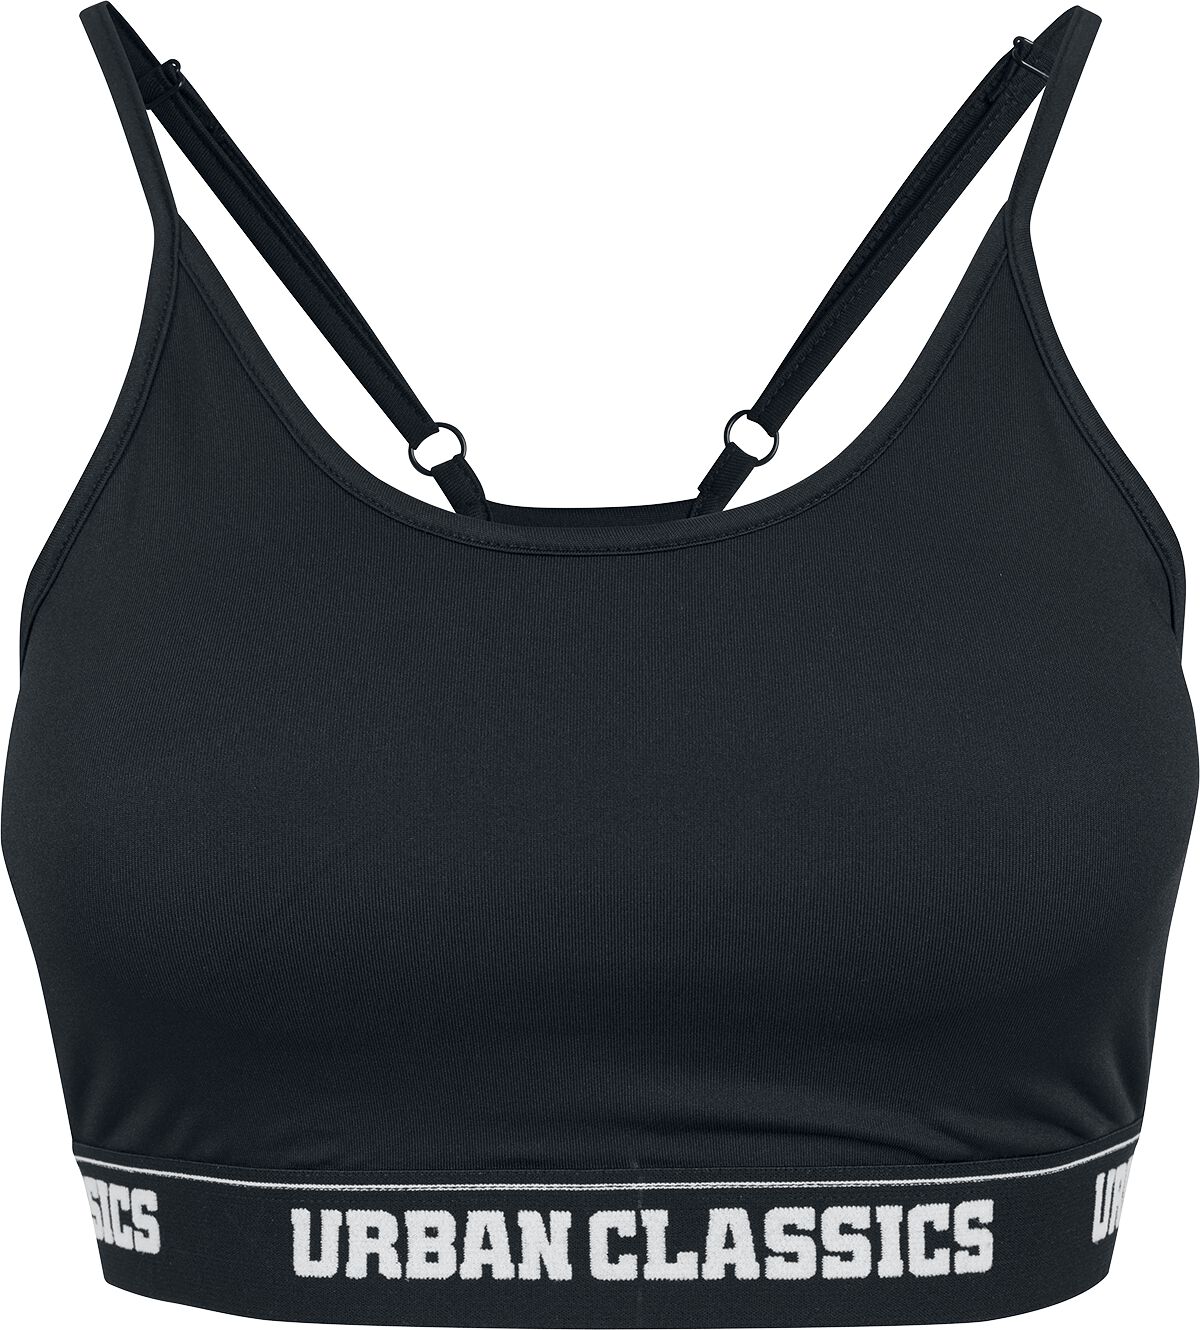 Urban Classics Ladies Sports Bra Bustier schwarz in M